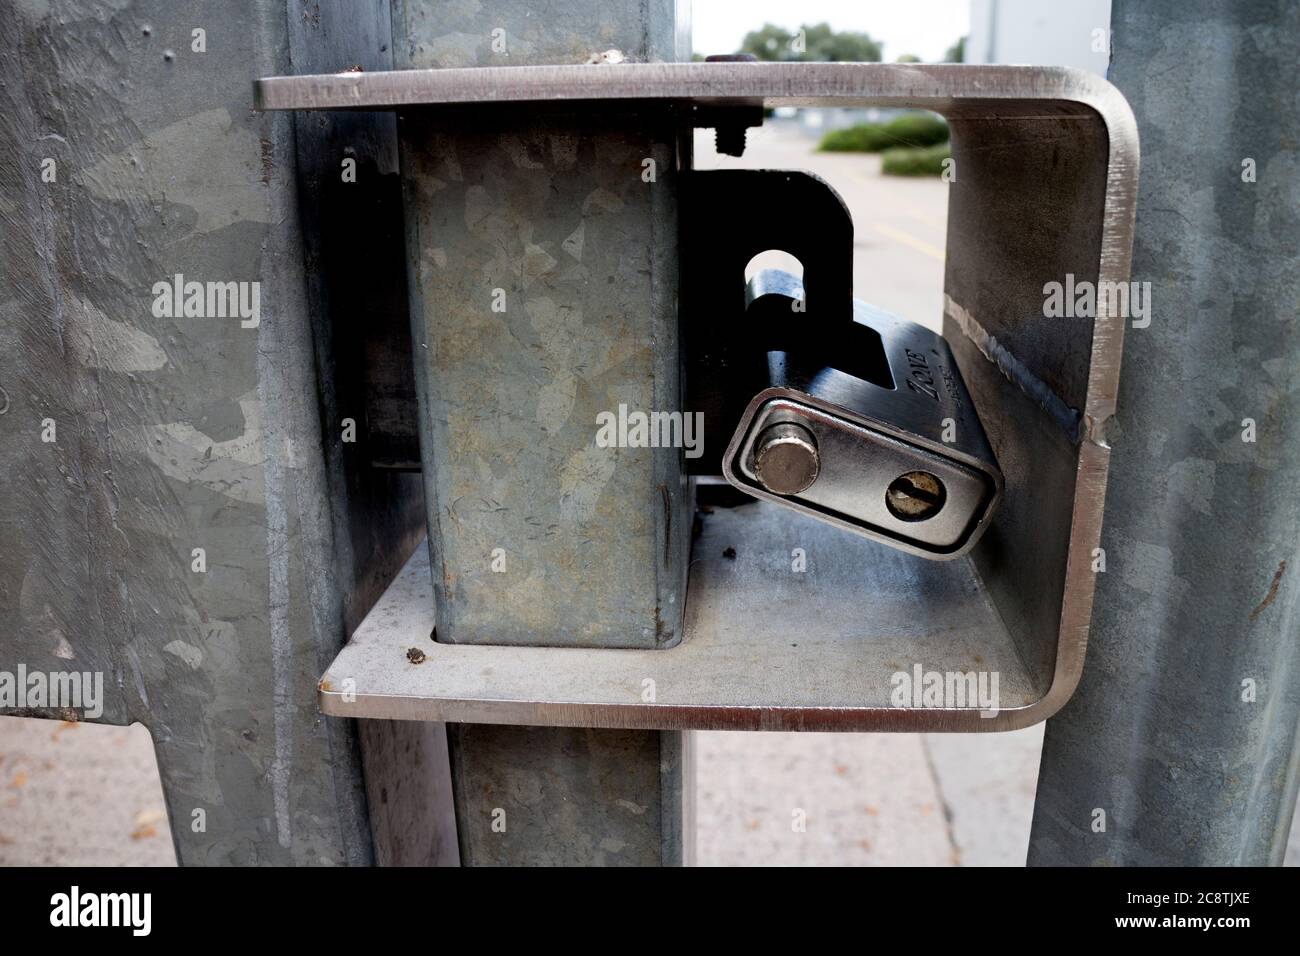 A sturdy lock on a metal gate, UK Stock Photo